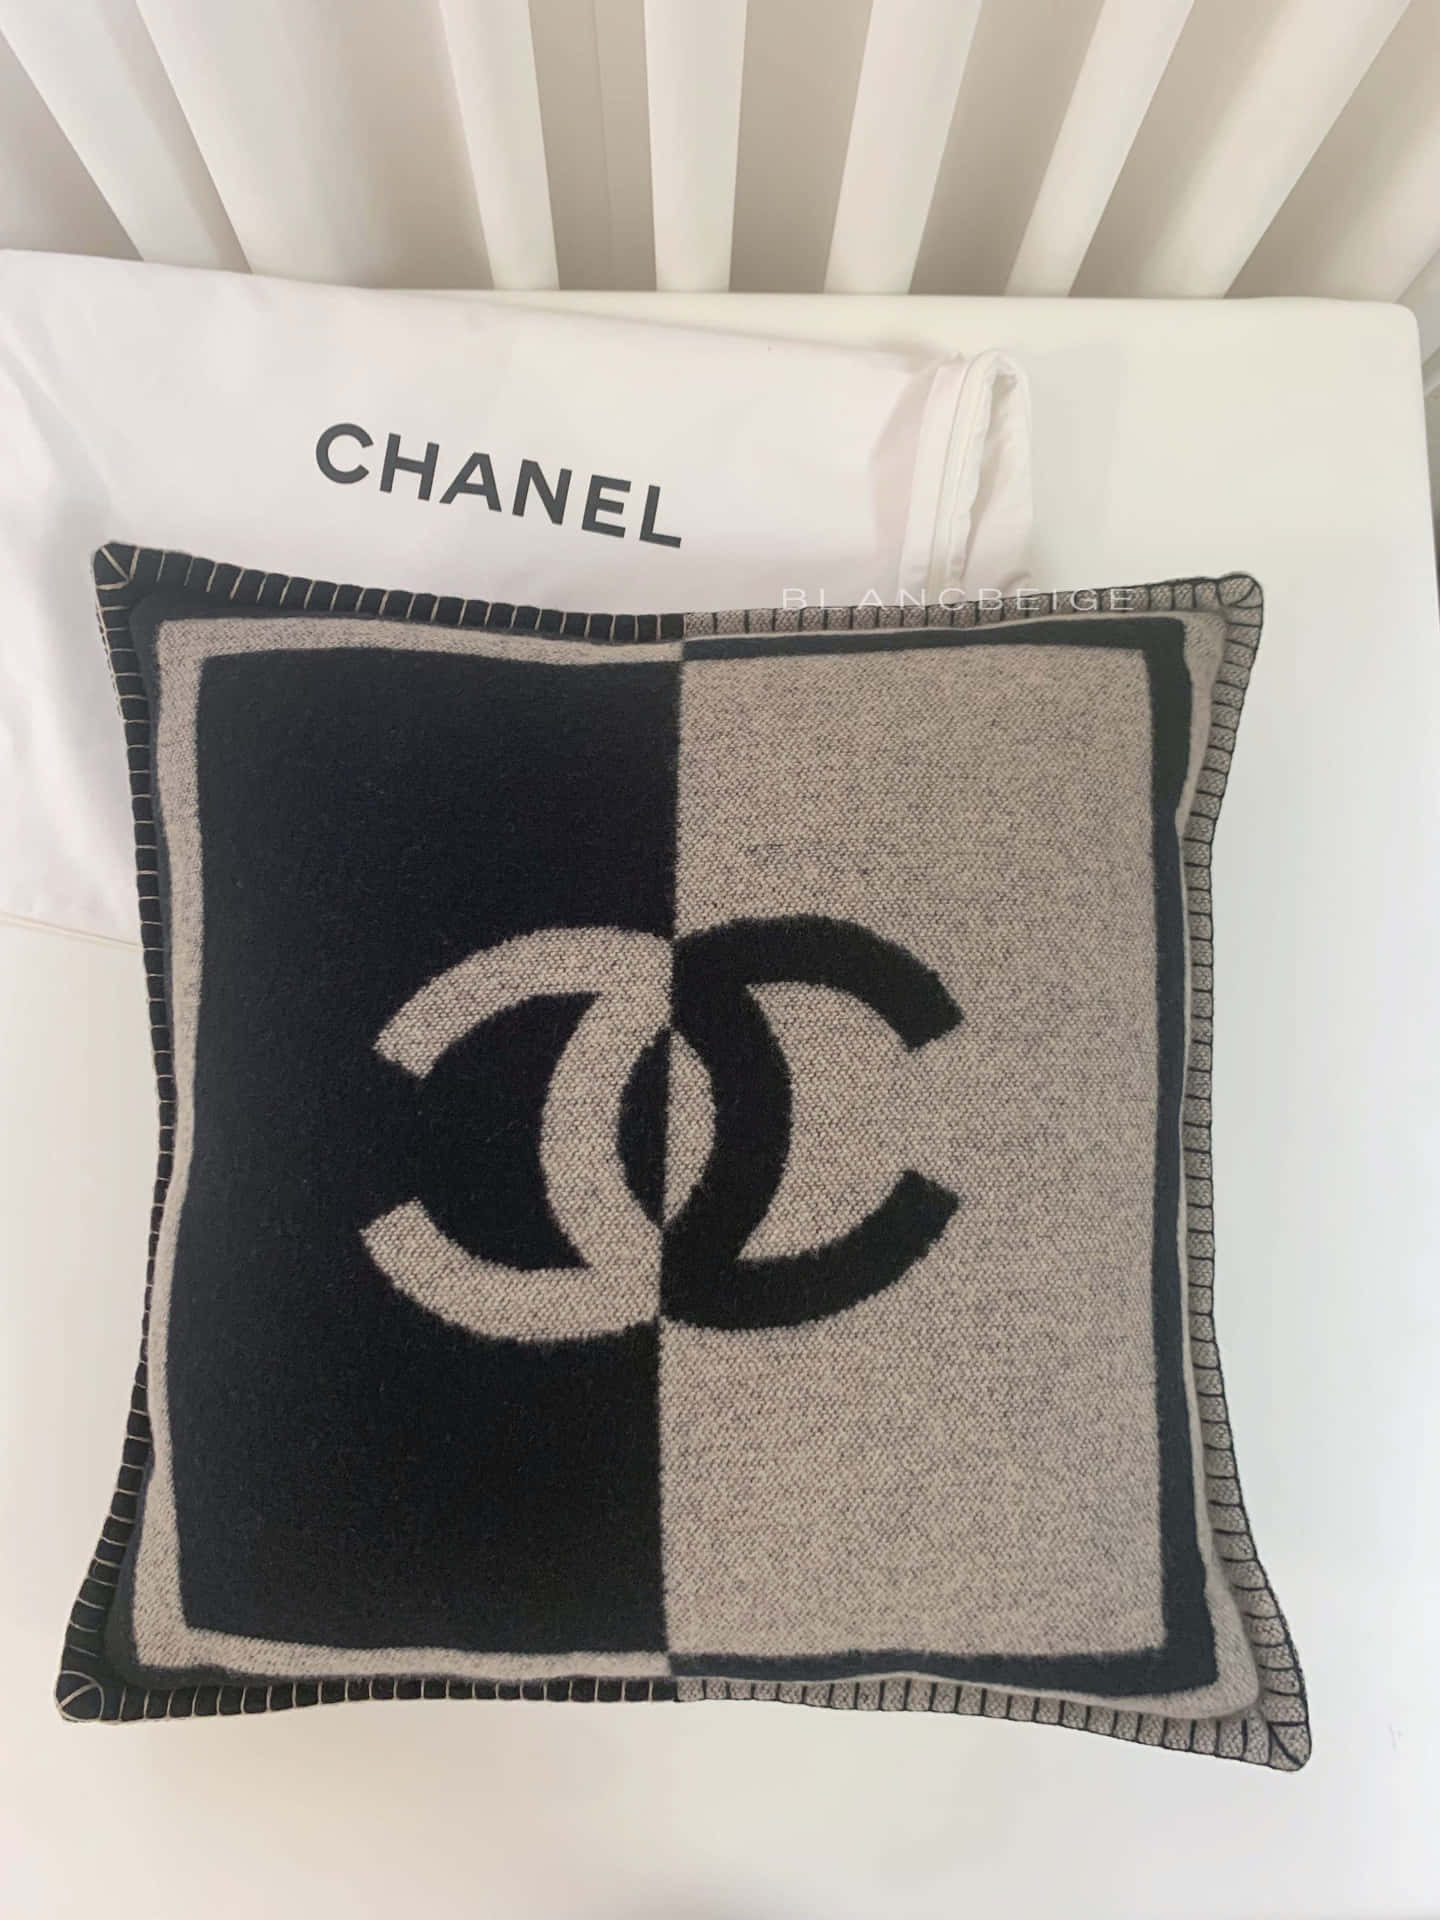 The iconic iconic Chanel Logo